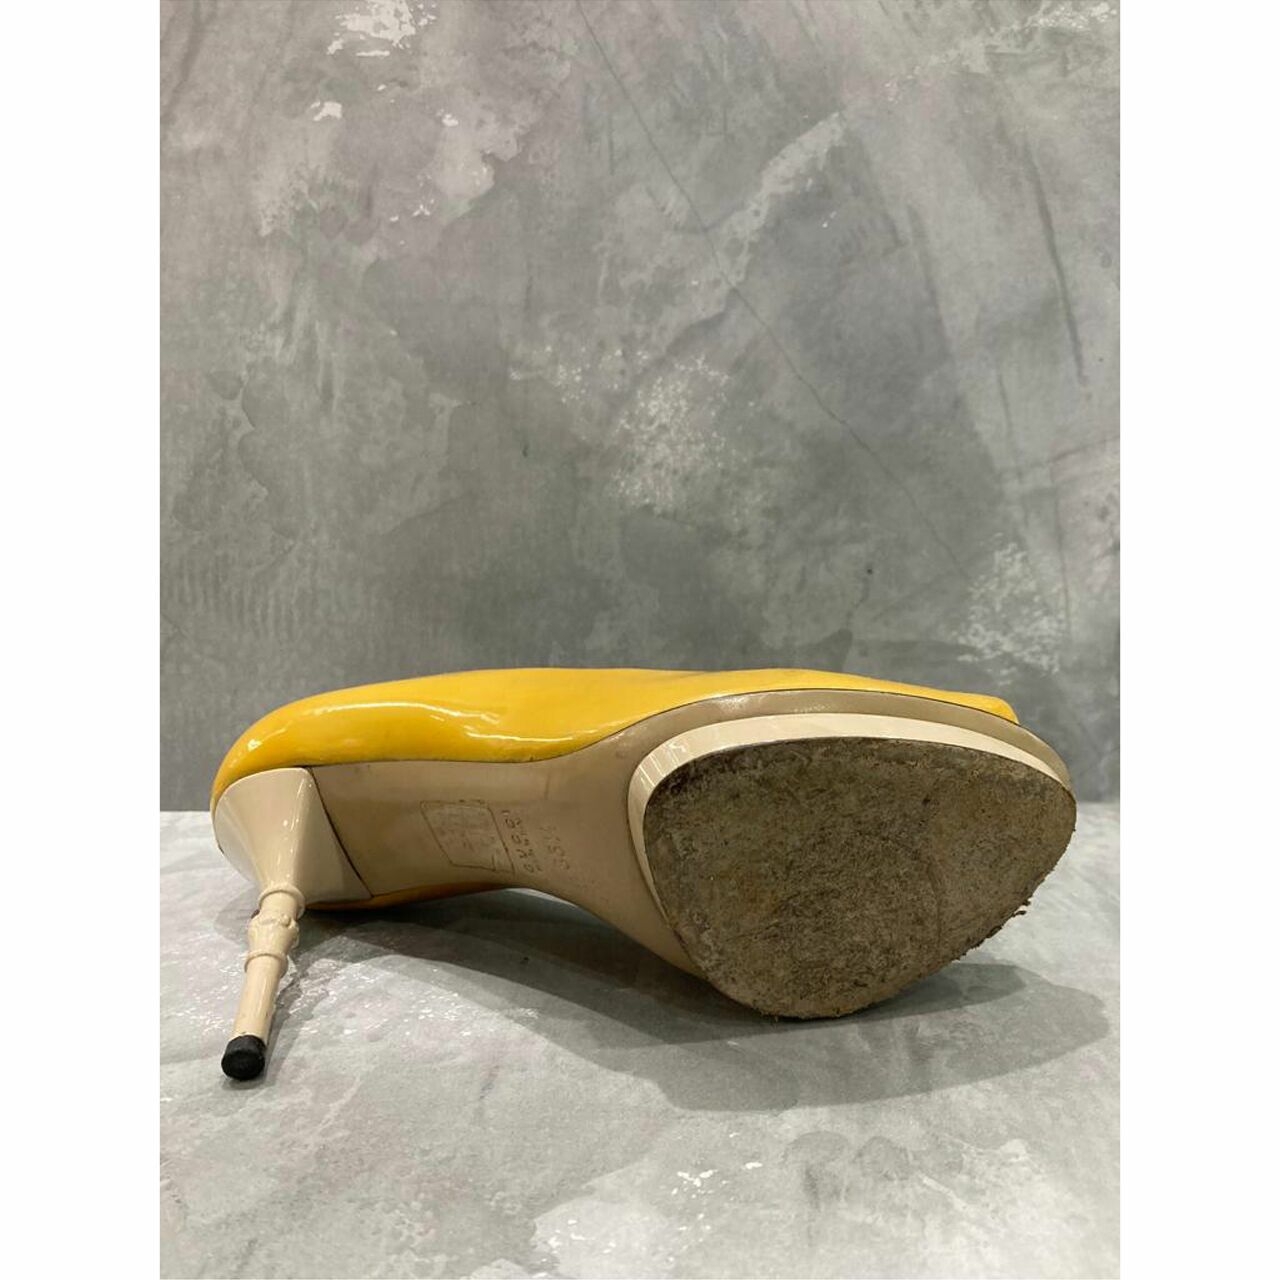 Sergio Rossi Patent Yellow Heels